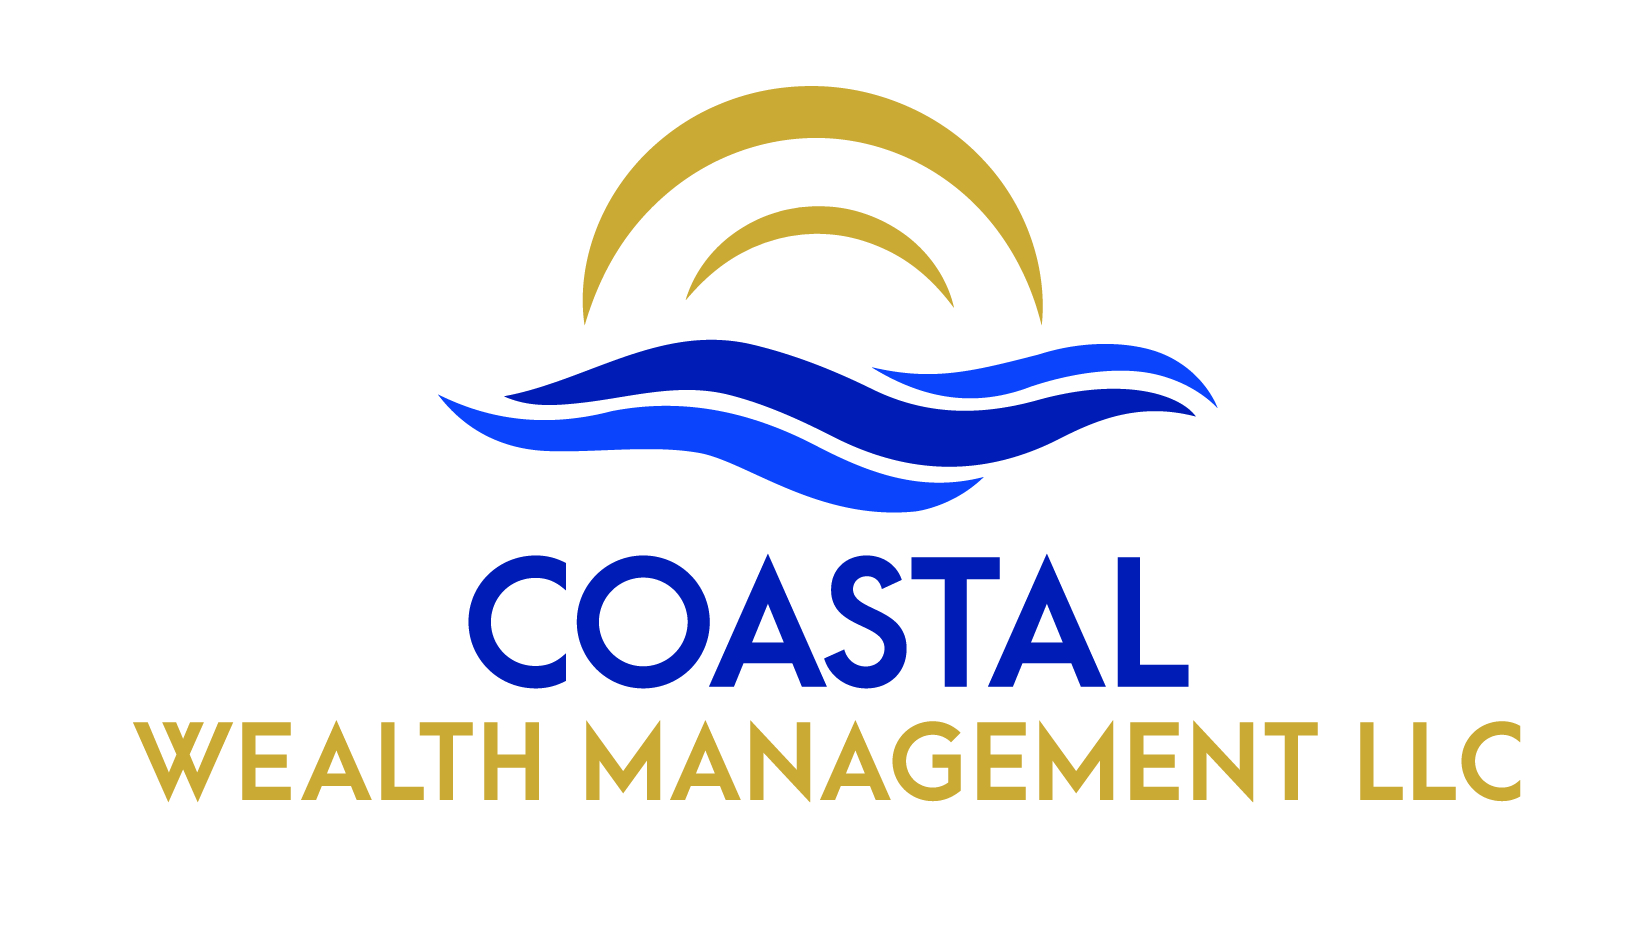 Coastal Wealth Management LLC